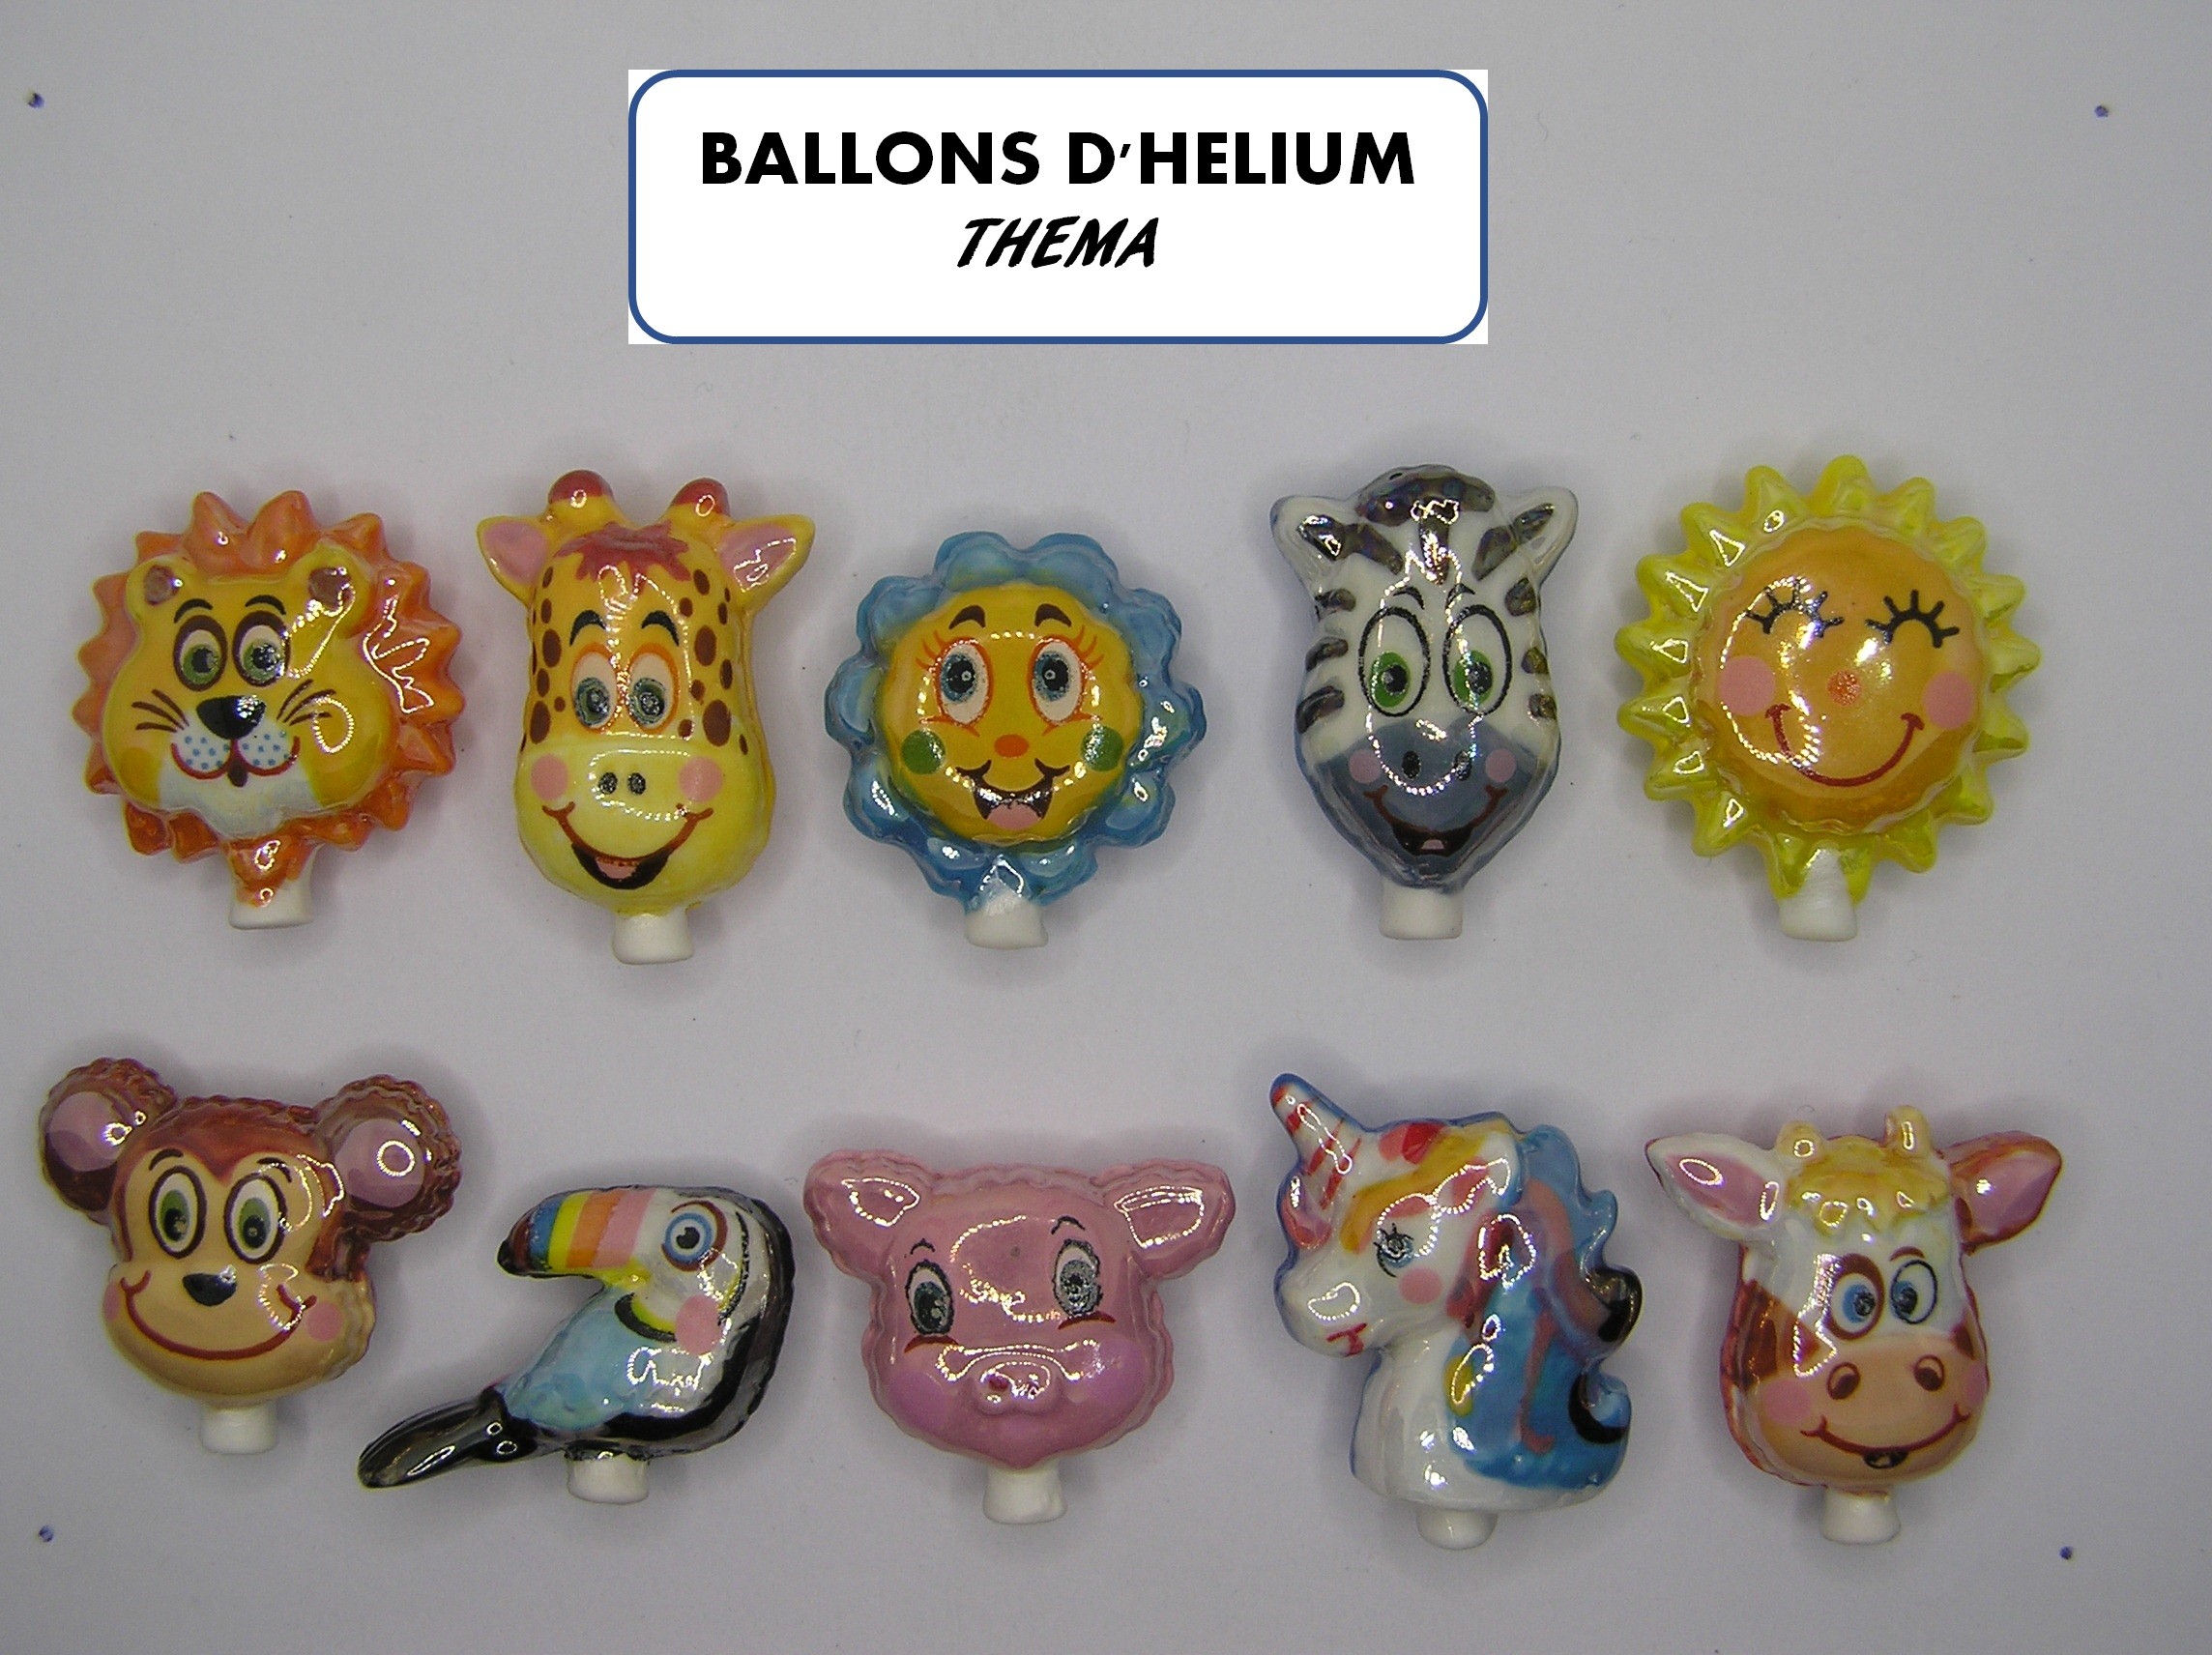 F 05 / BALLONS D'HELIUM / 13 €uros / THEMA - PRIME / AFF 85.2022